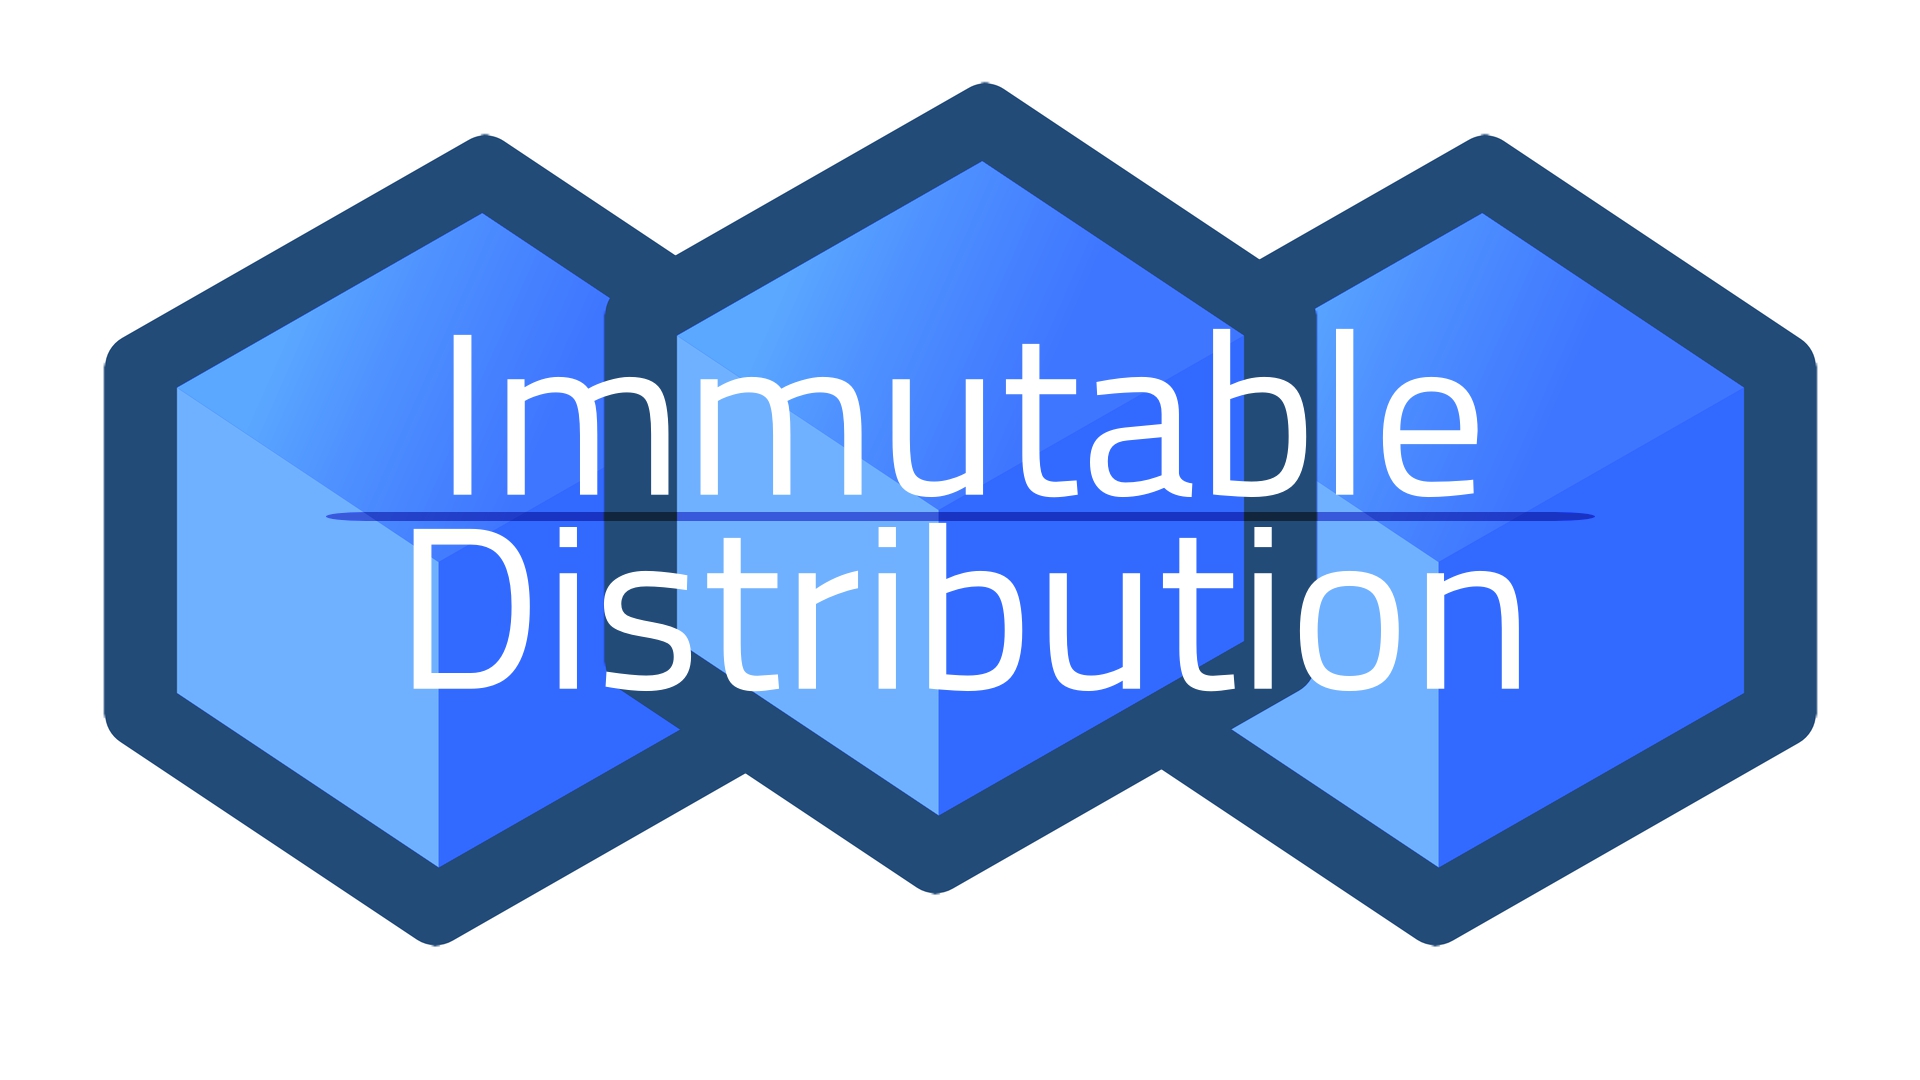 Immutable Distribution